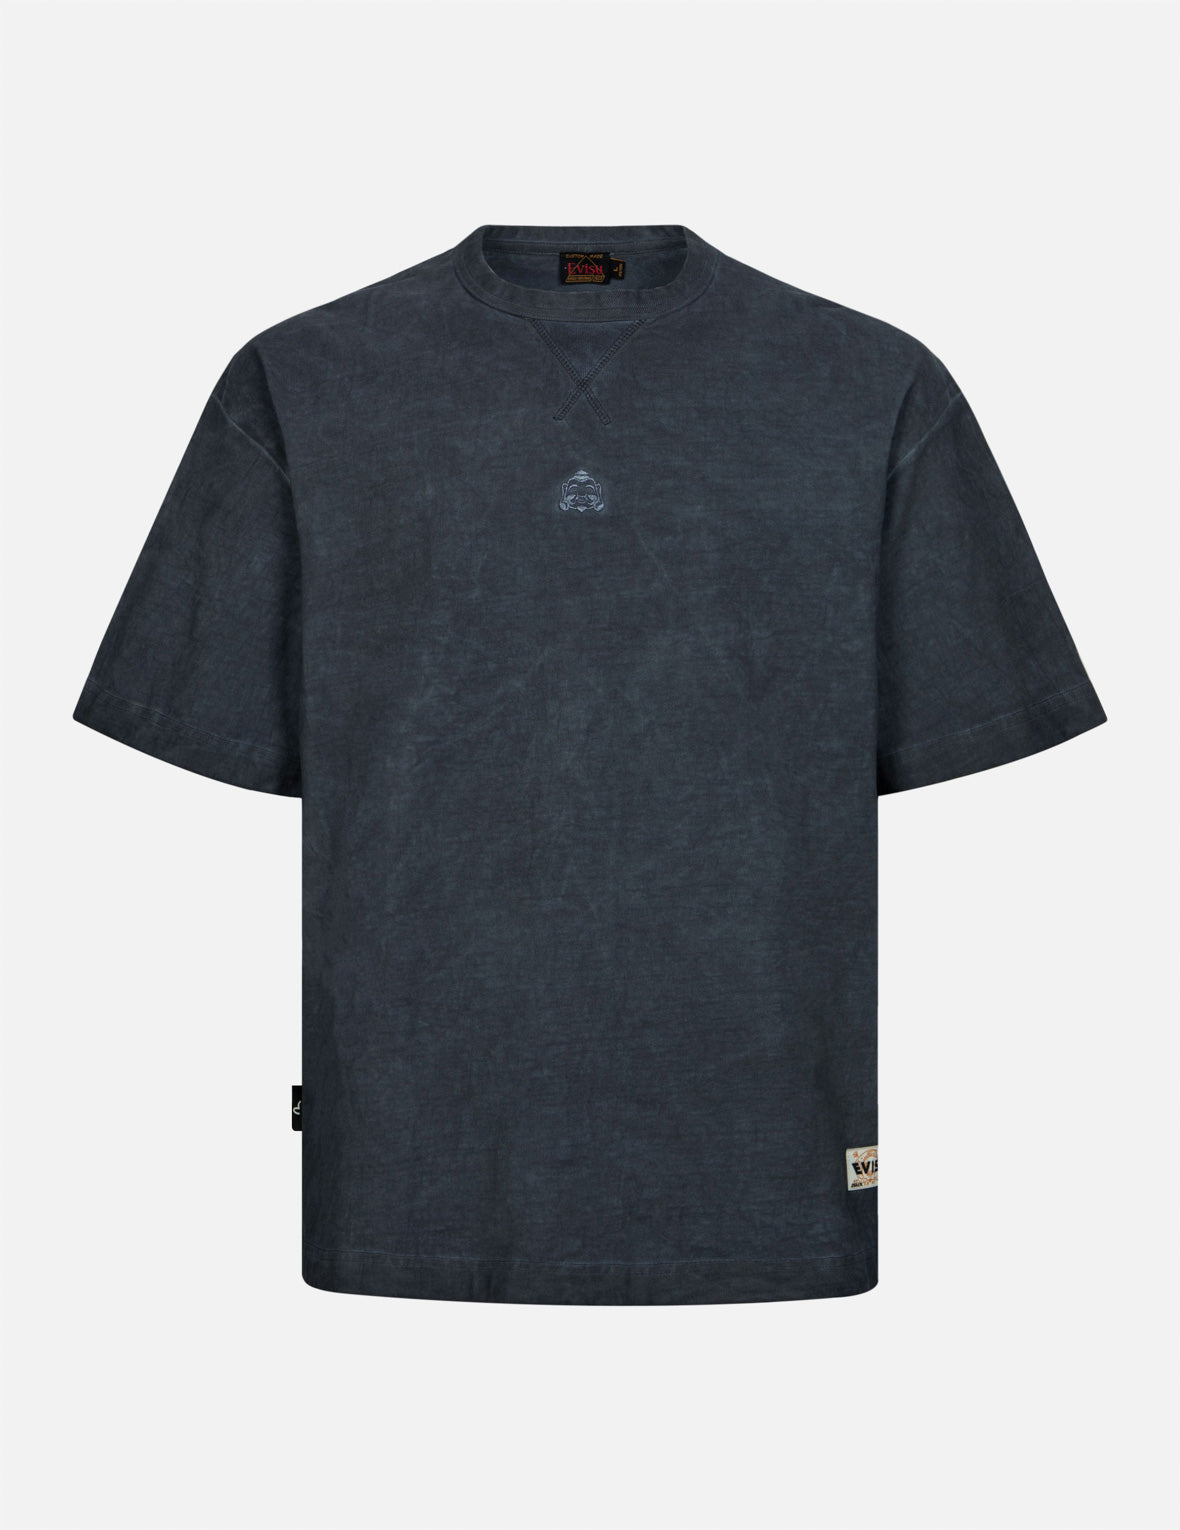 Evisu Godhead Embroidery And Kamon Print Loose Fit T-Shirt